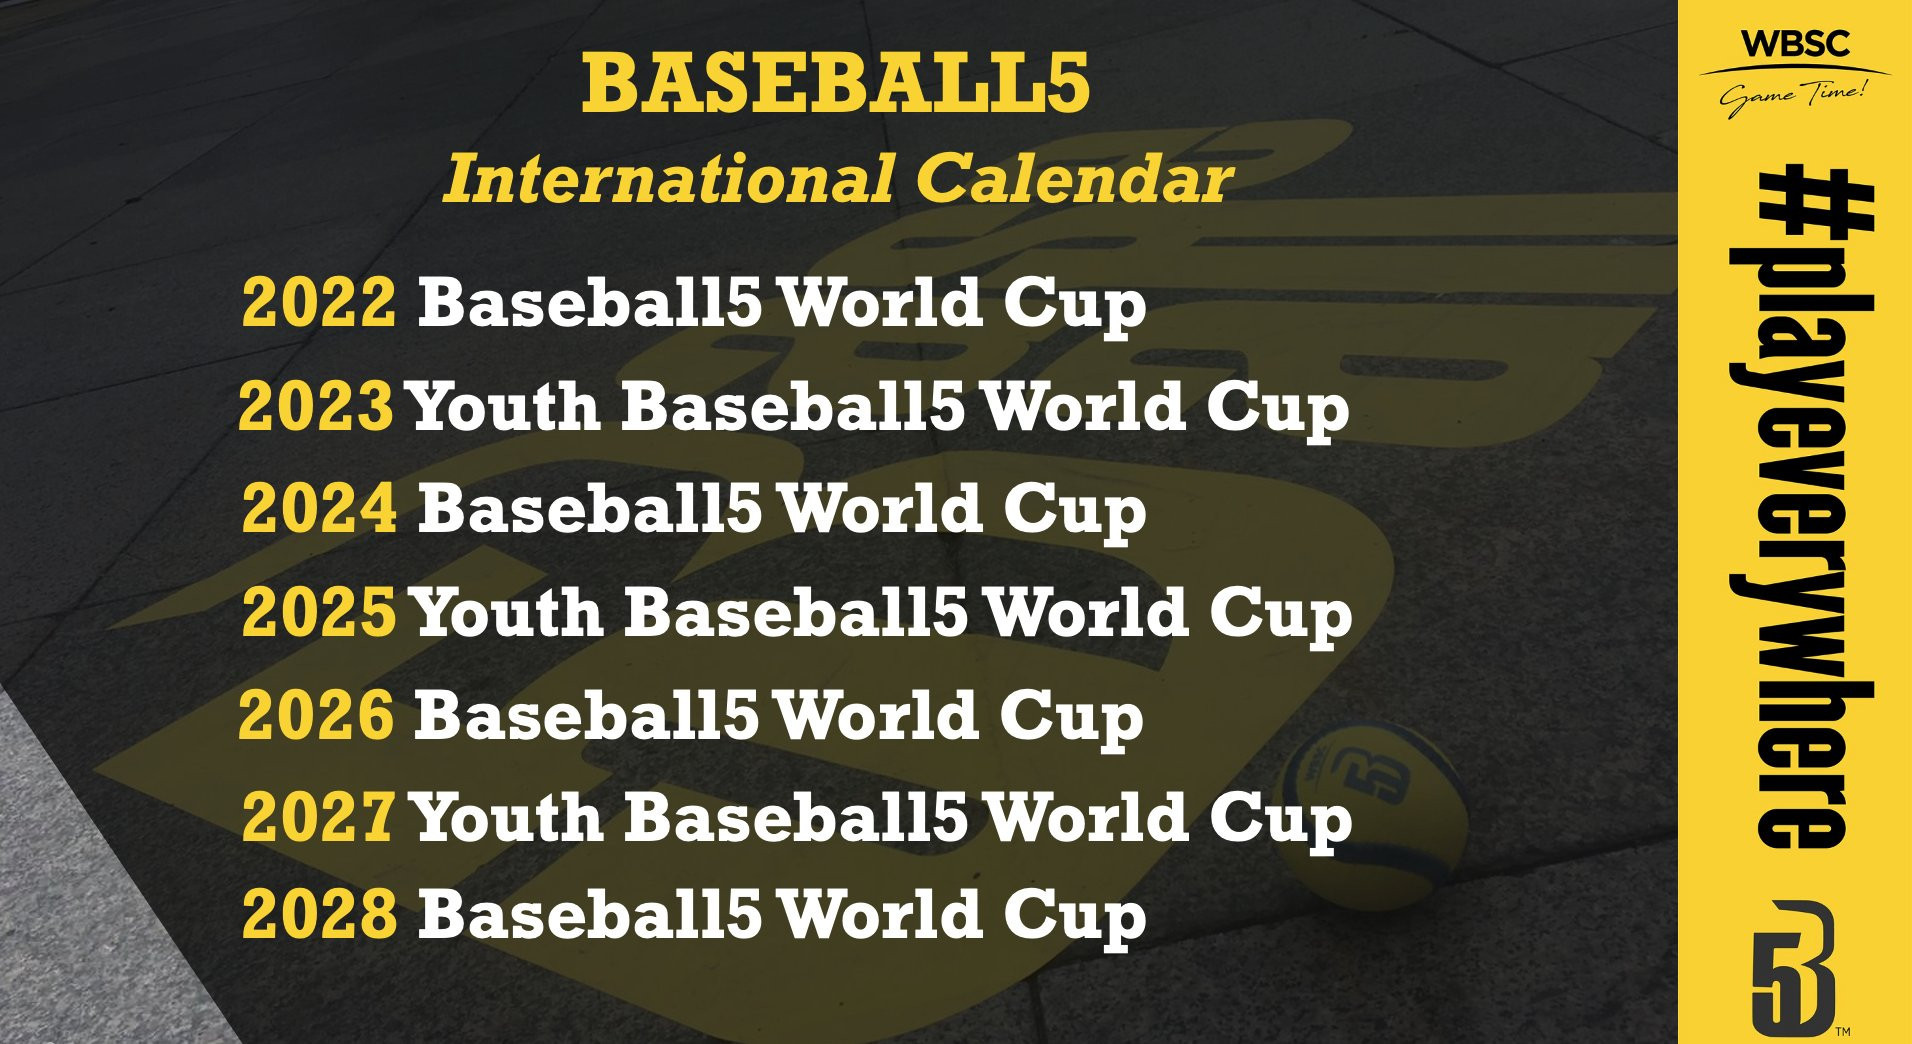 An international calendar for Baseball5 events has been outlined ©WBSC